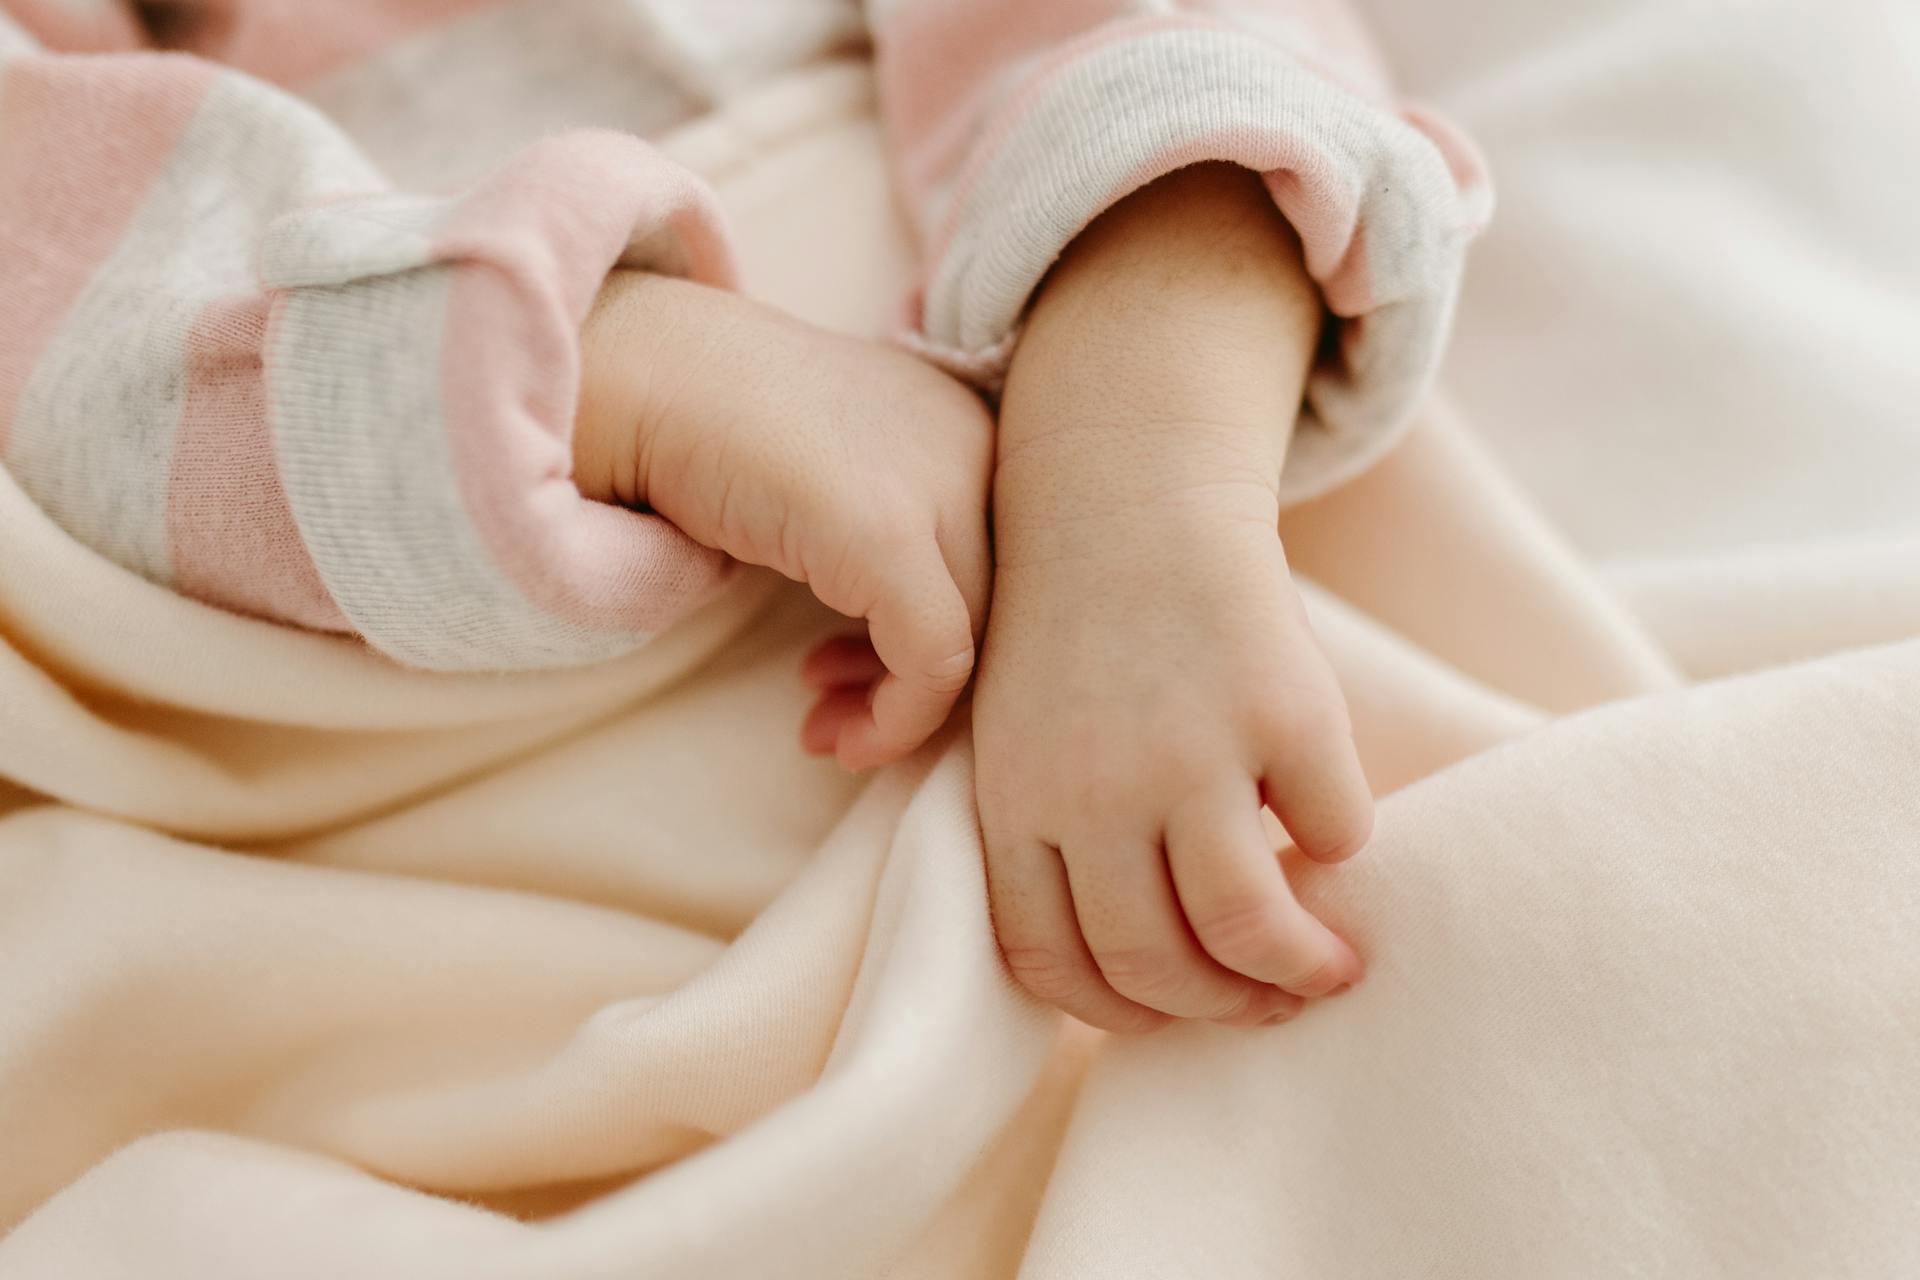 A close-up shot of a newborn baby's hands | Source: Pexels